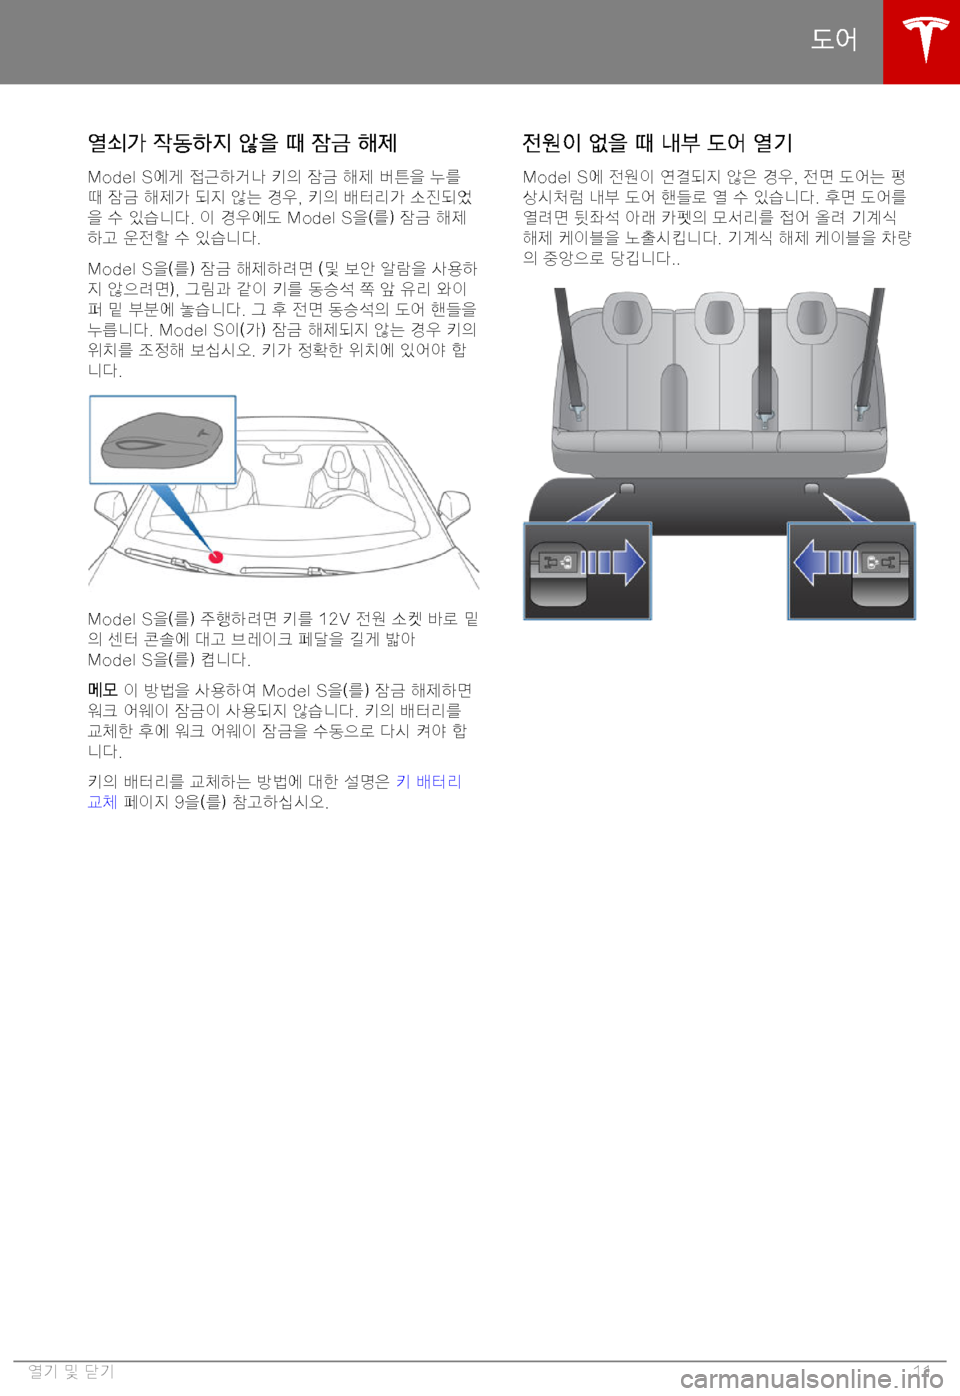 TESLA MODEL S 2019  사용자 가이드 (in Korean) 